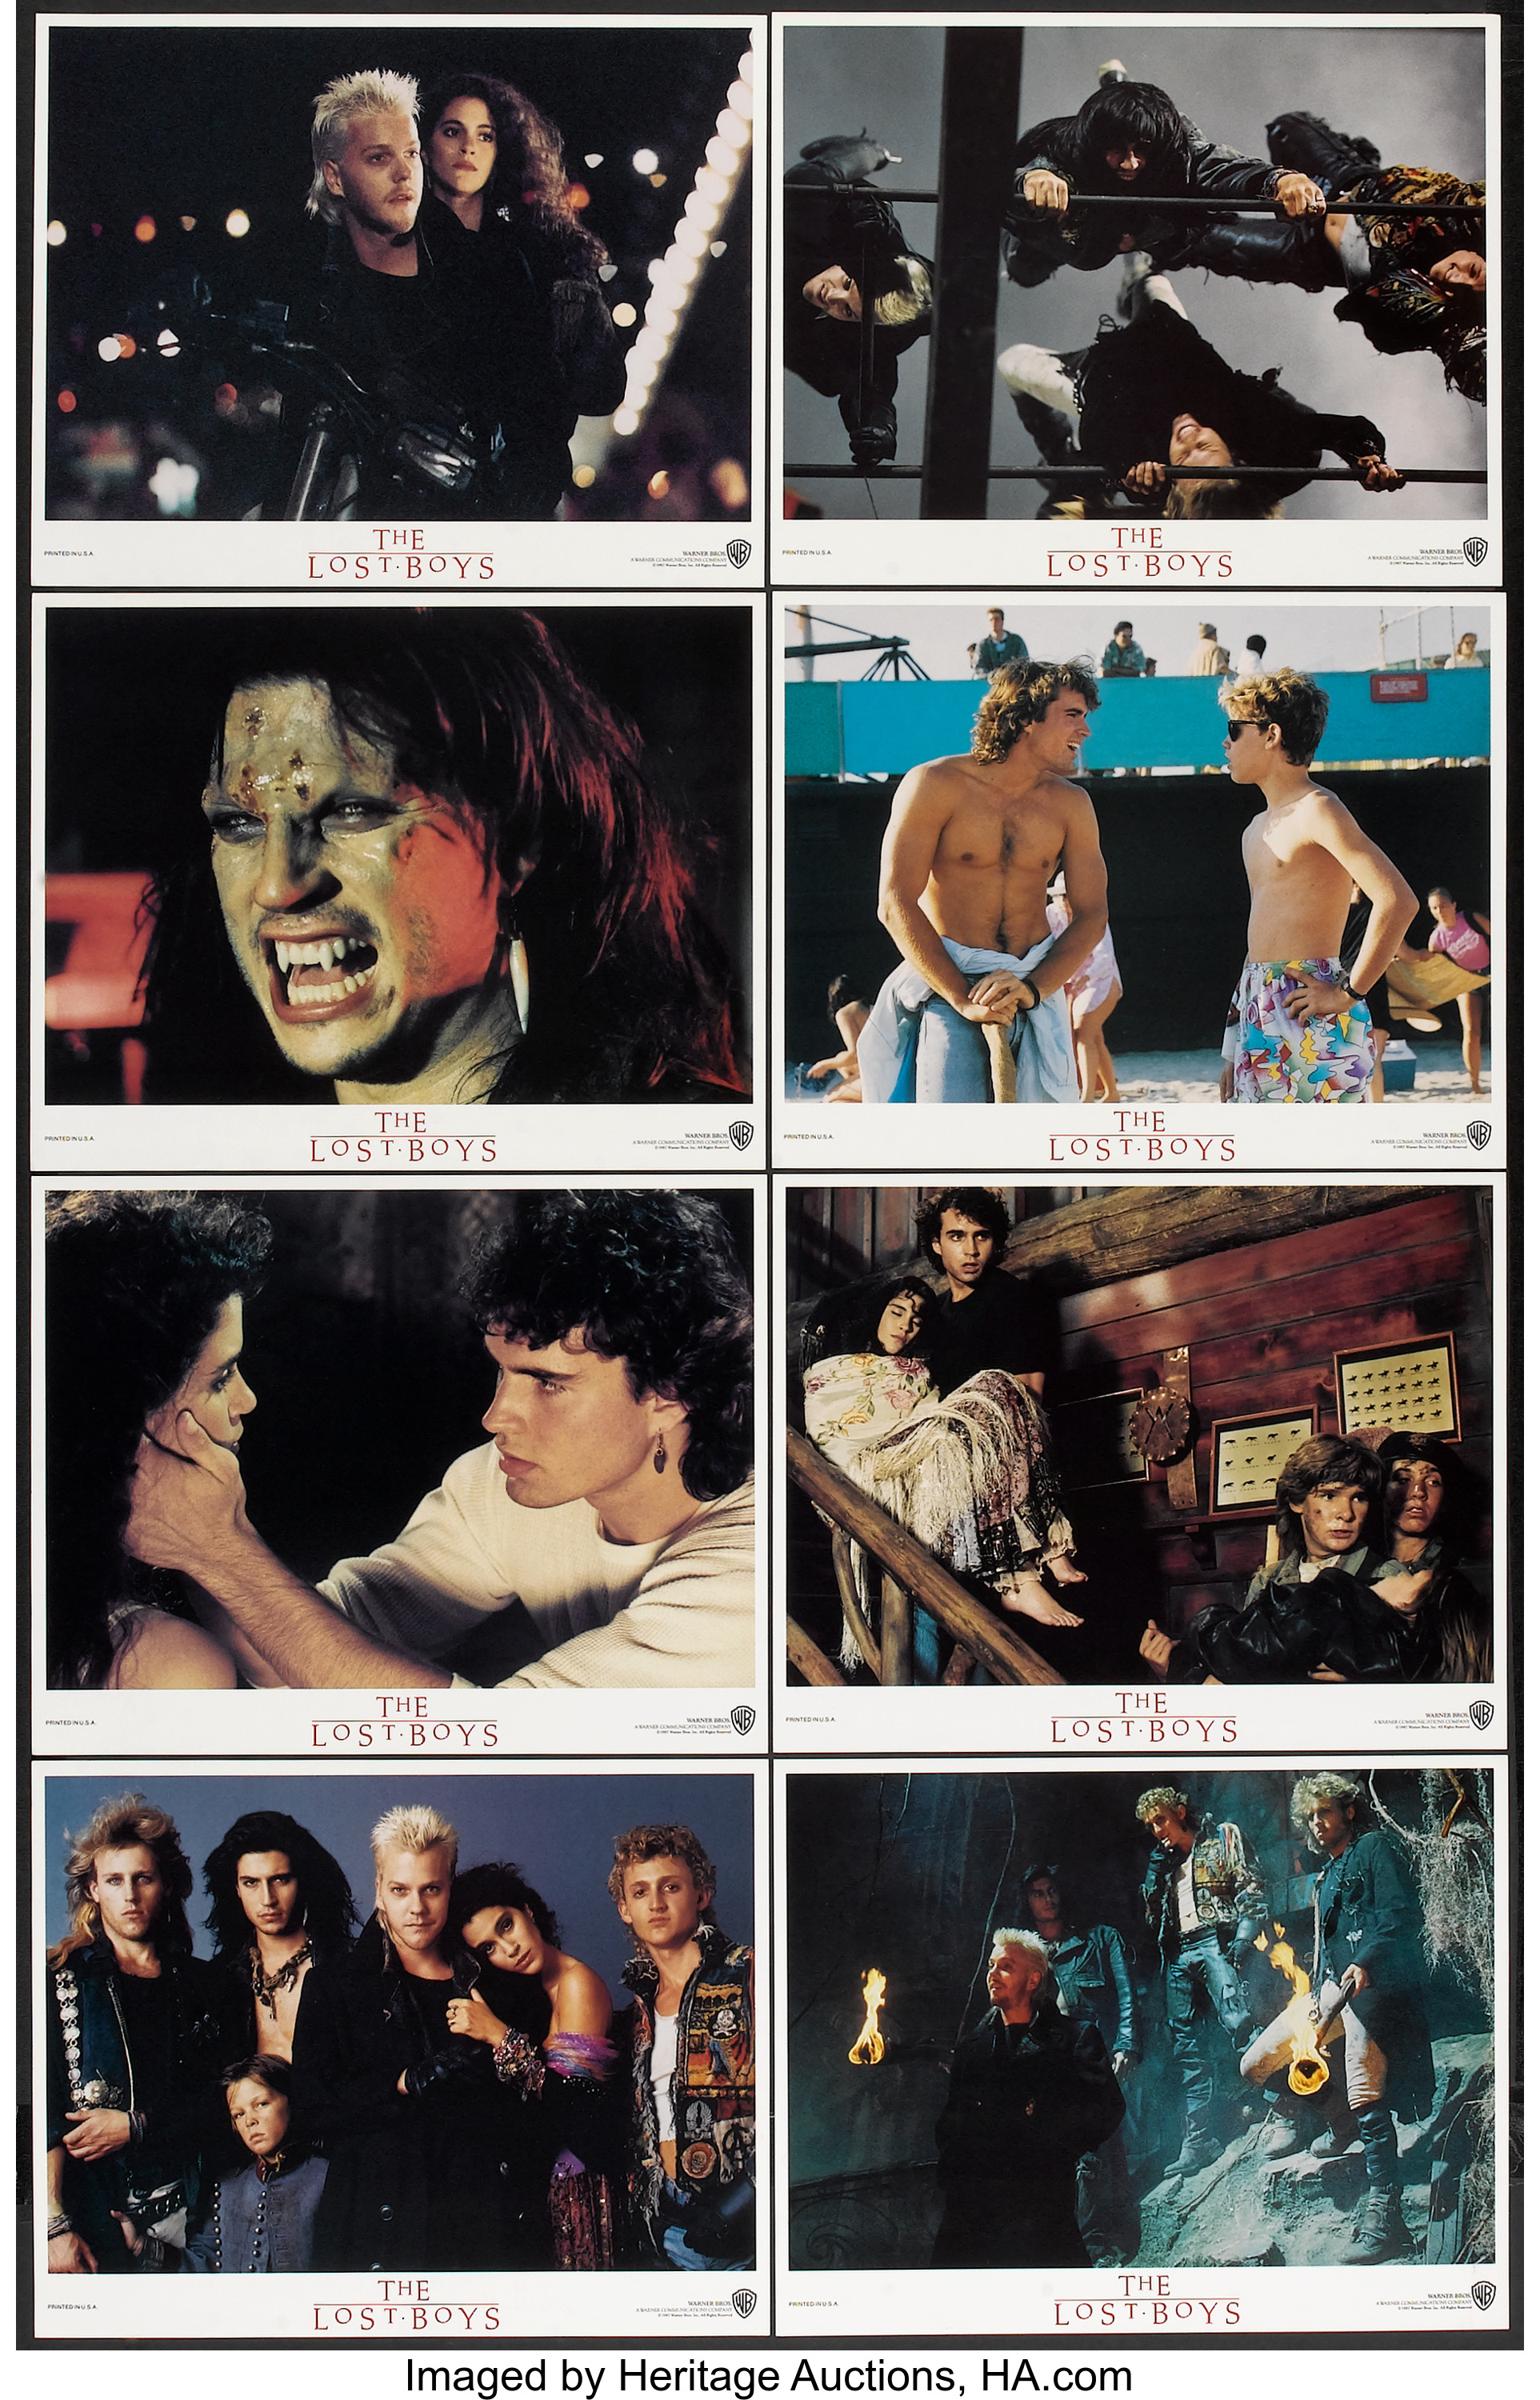 The Lost Boys (1987) lobby cards